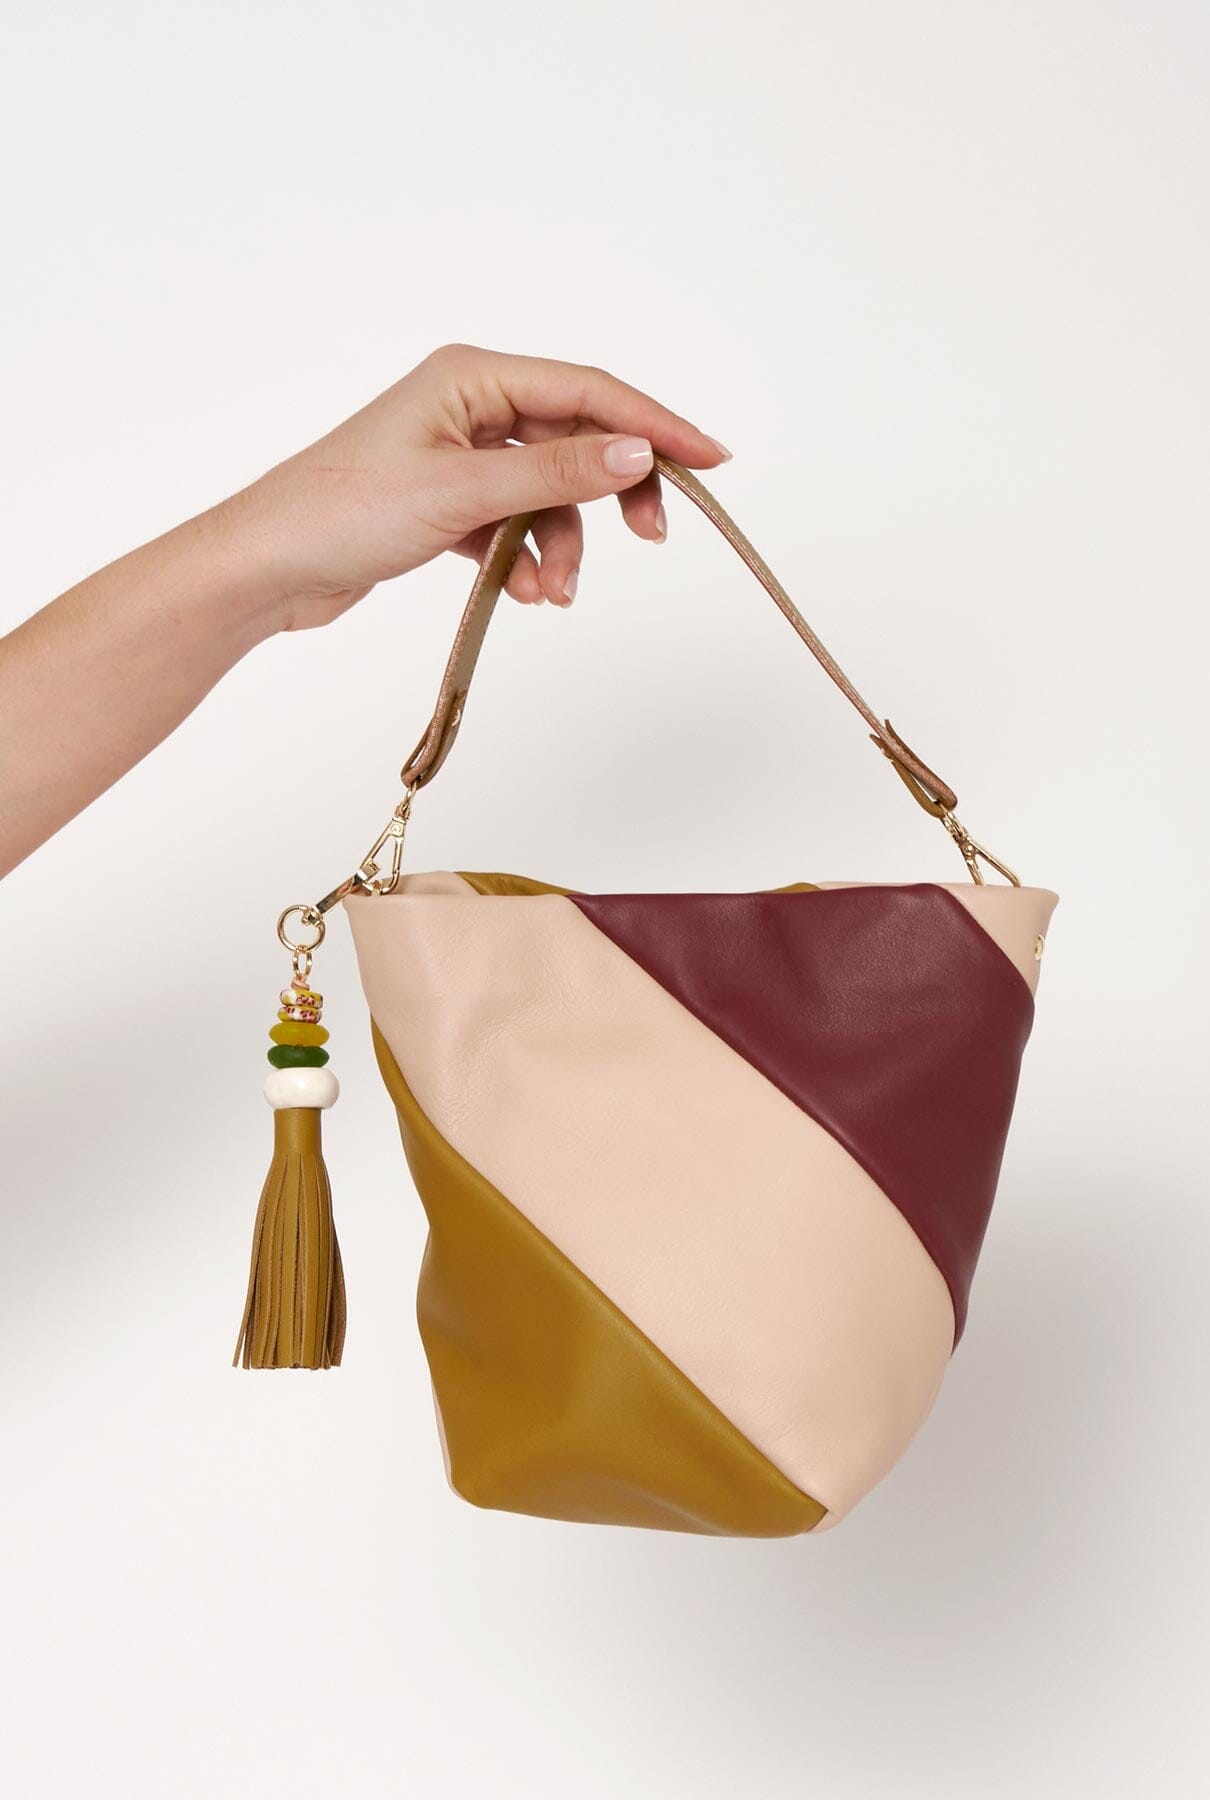 The Mini Lola Bag Tricolor Burdeos Hand bags The Bag Lab 